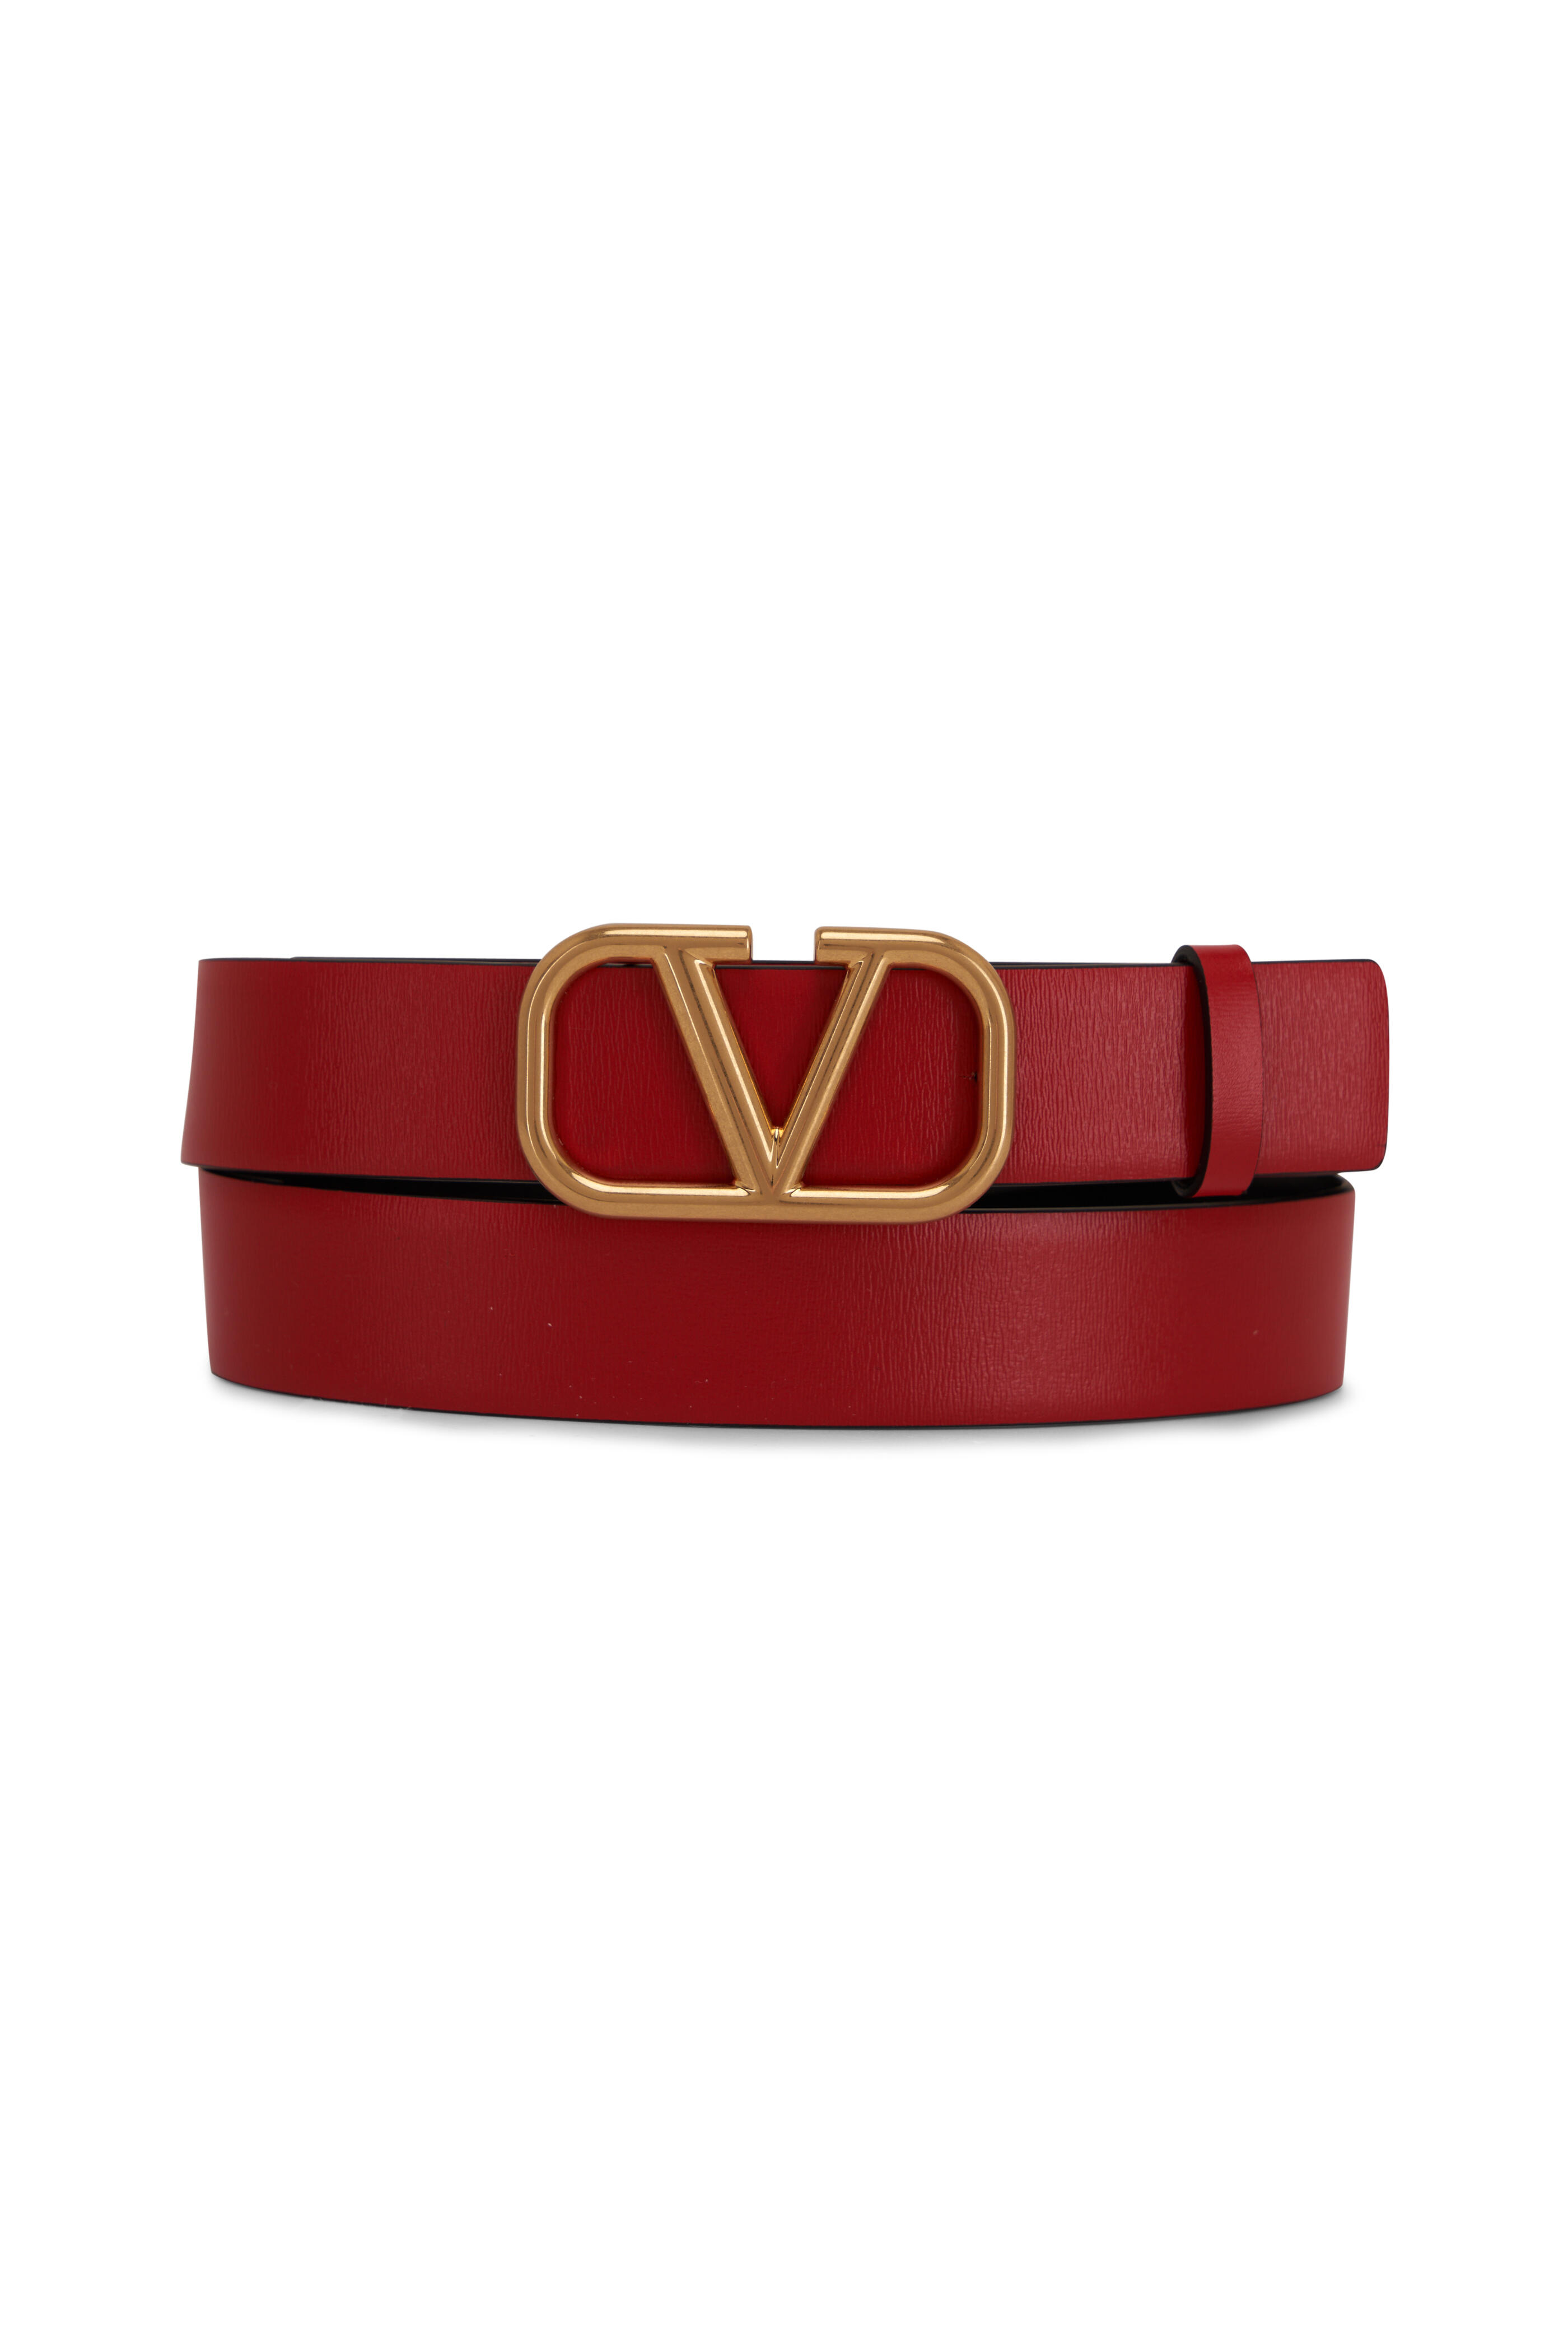 Valentino Garavani engraved-buckle leather belt - Black